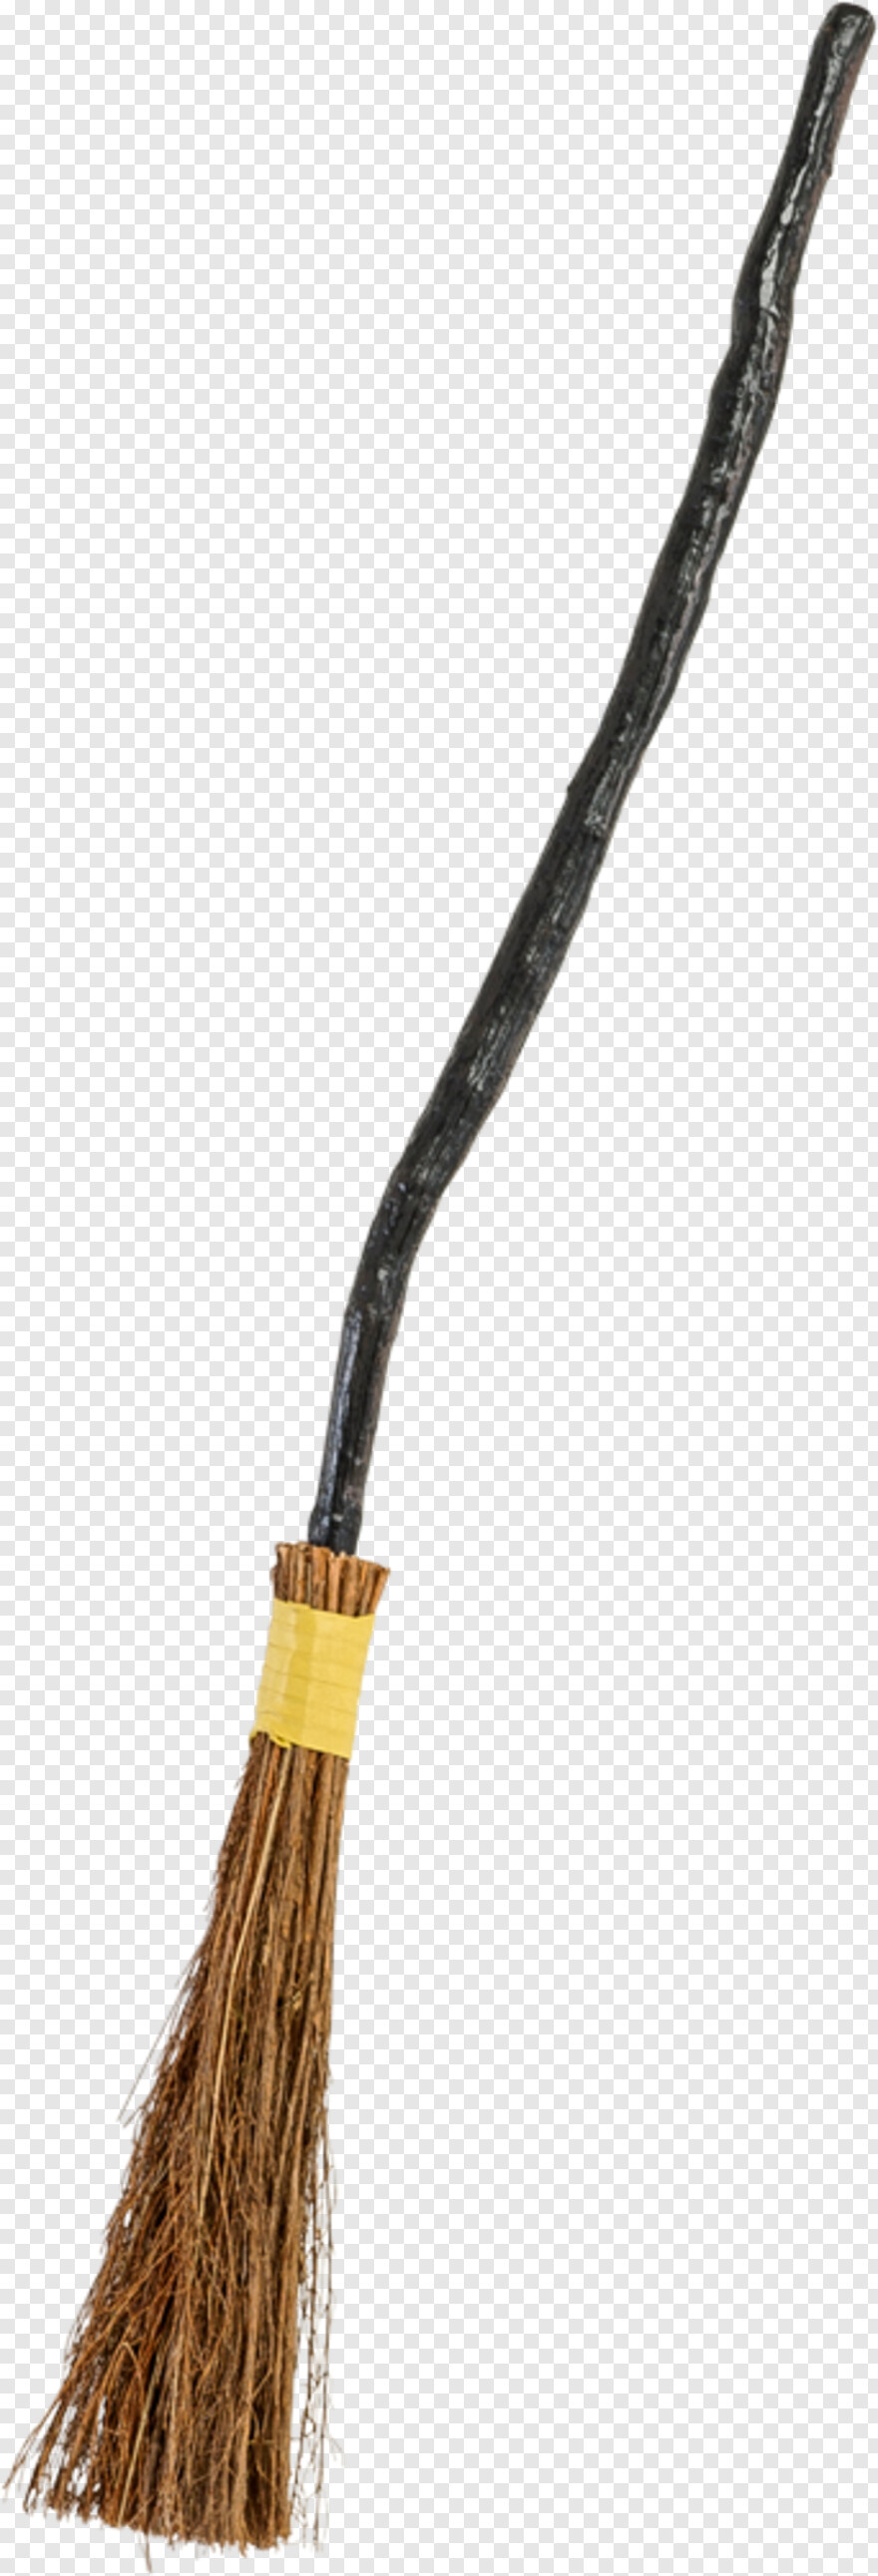 broom # 1110302